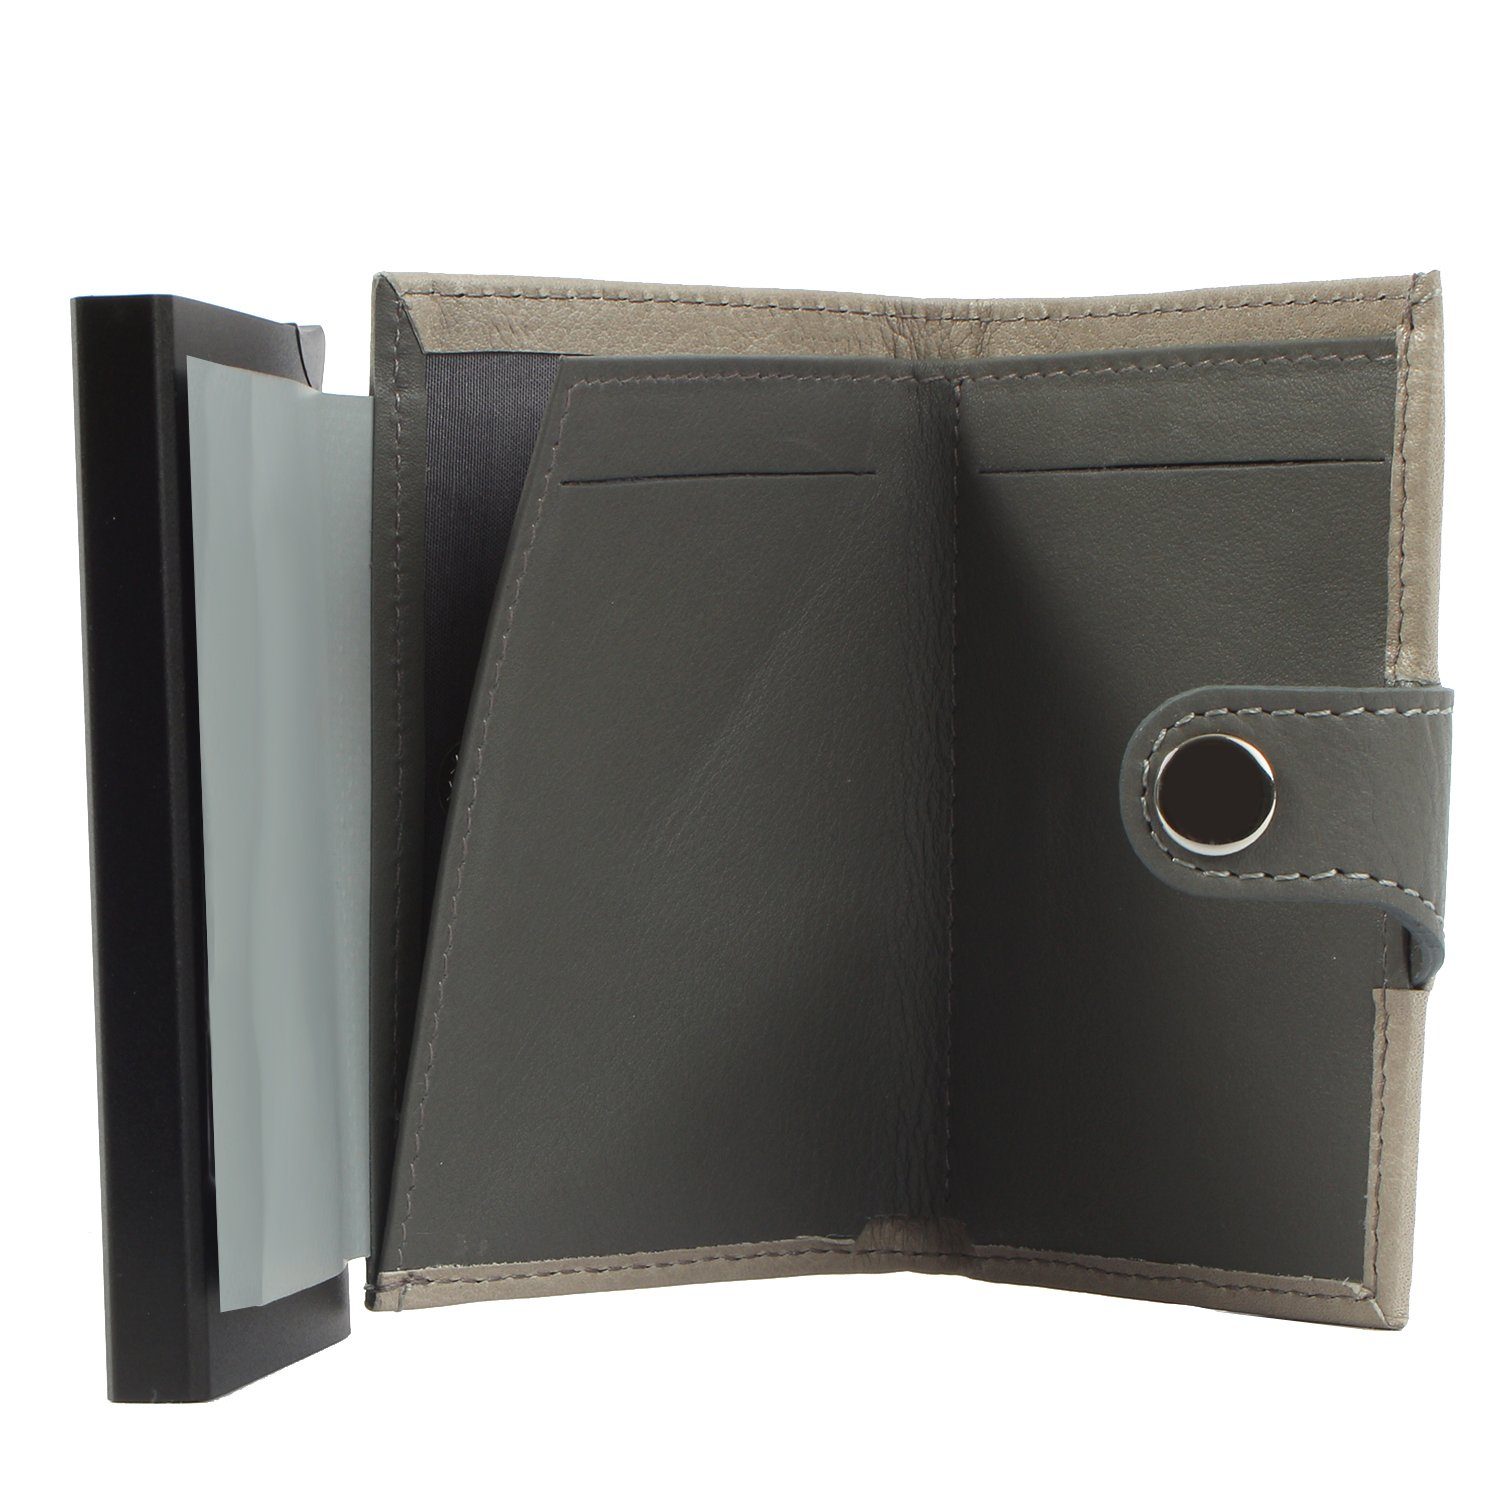 senf leather, Margelisch Mini Geldbörse single noonyu aus Leder Upcycling Kreditkartenbörse